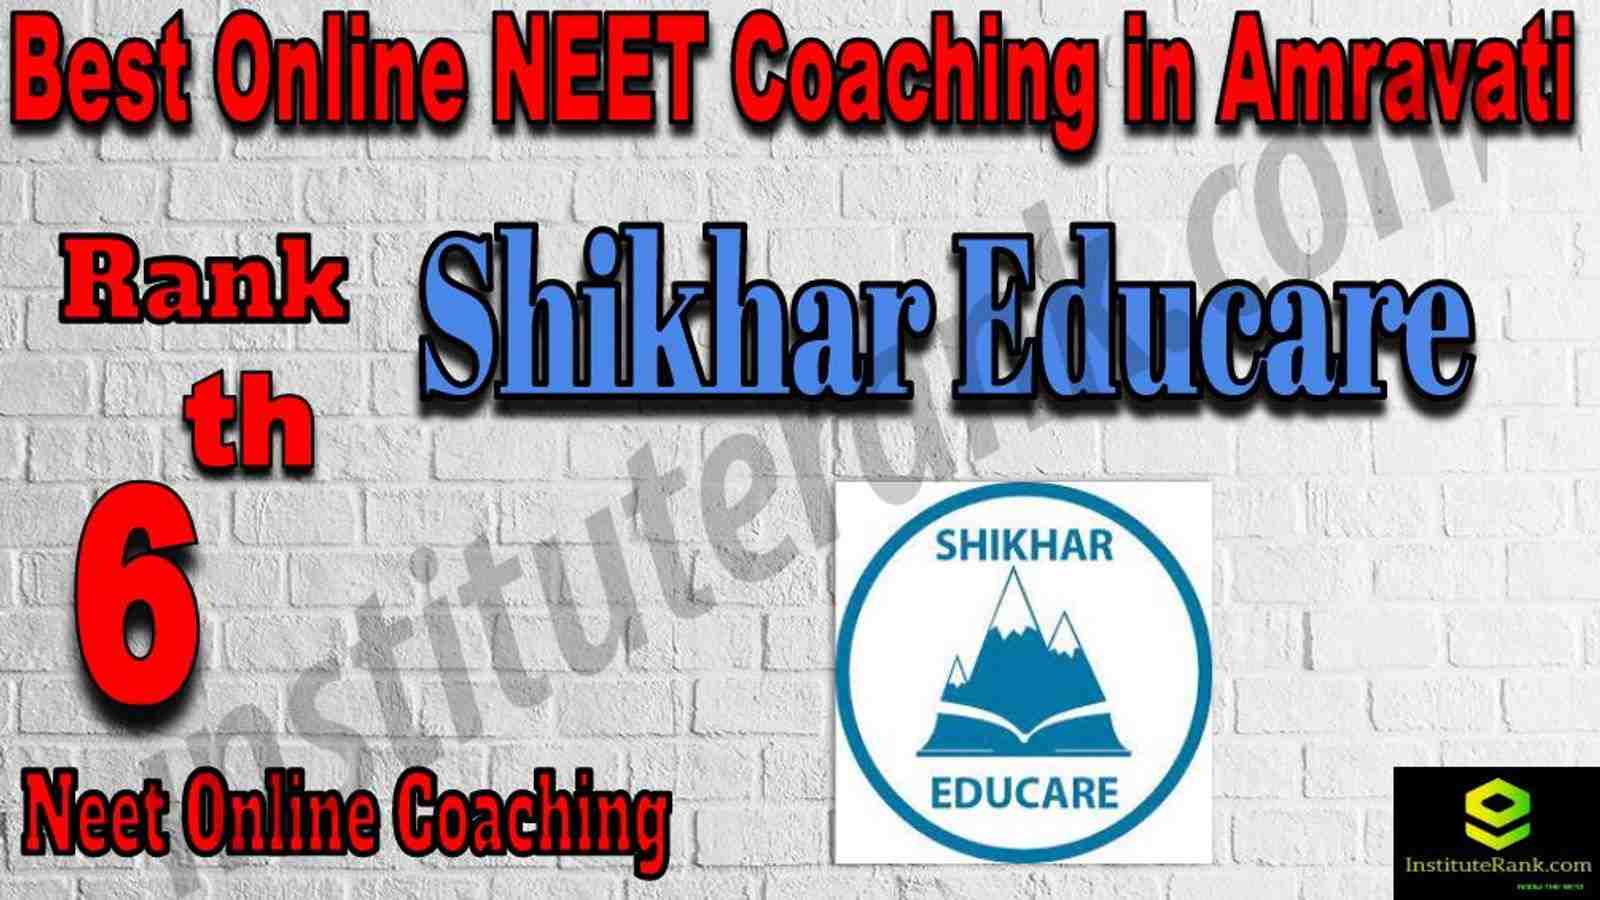 6th Best Online Neet Coaching in Amravati